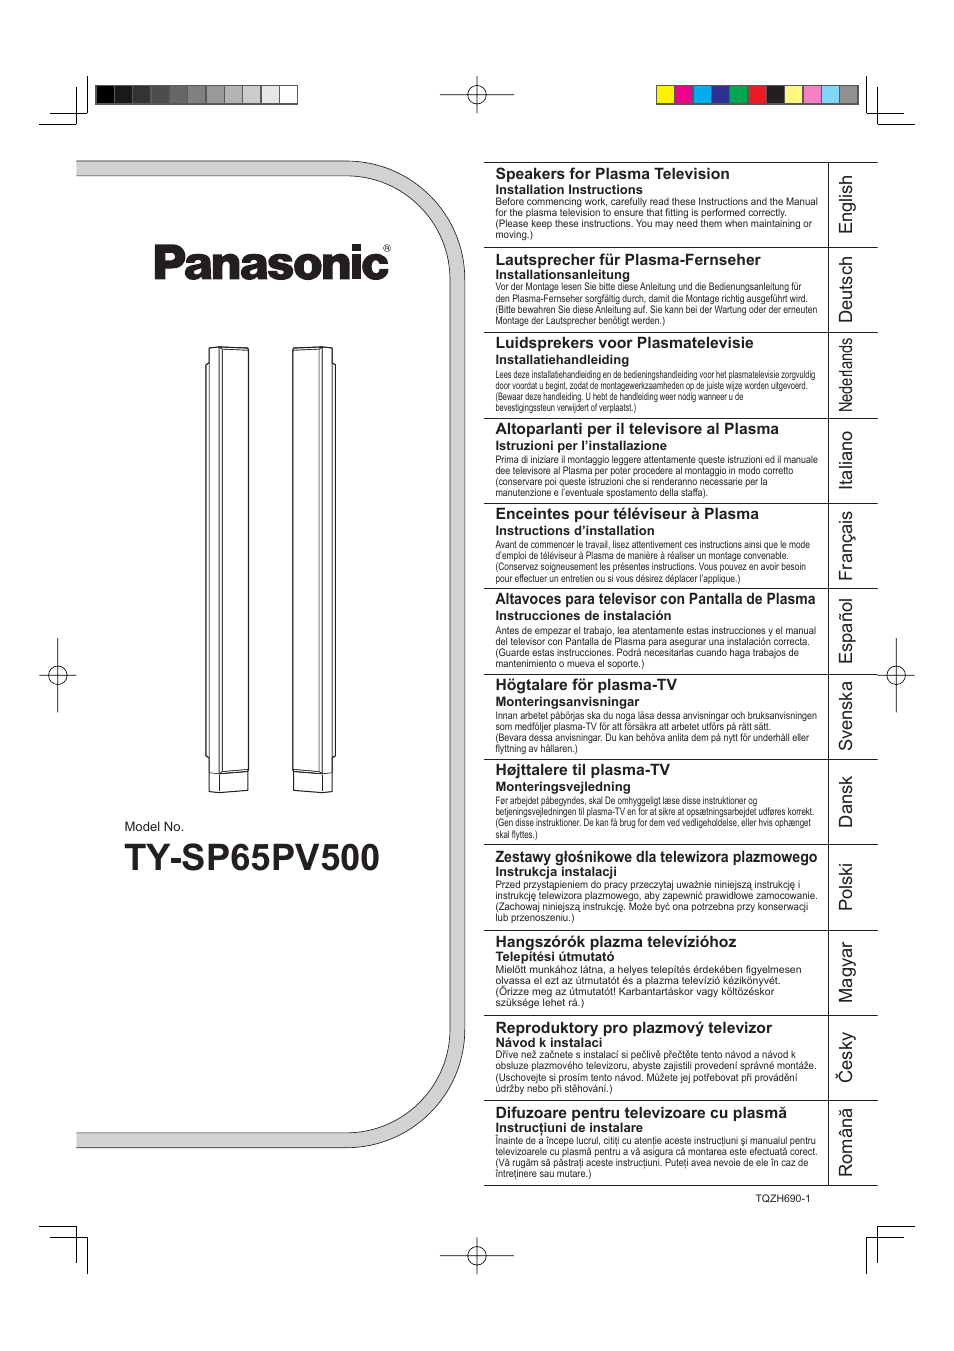 Panasonic TYSP65PV500 User Manual | 40 pages | Original mode